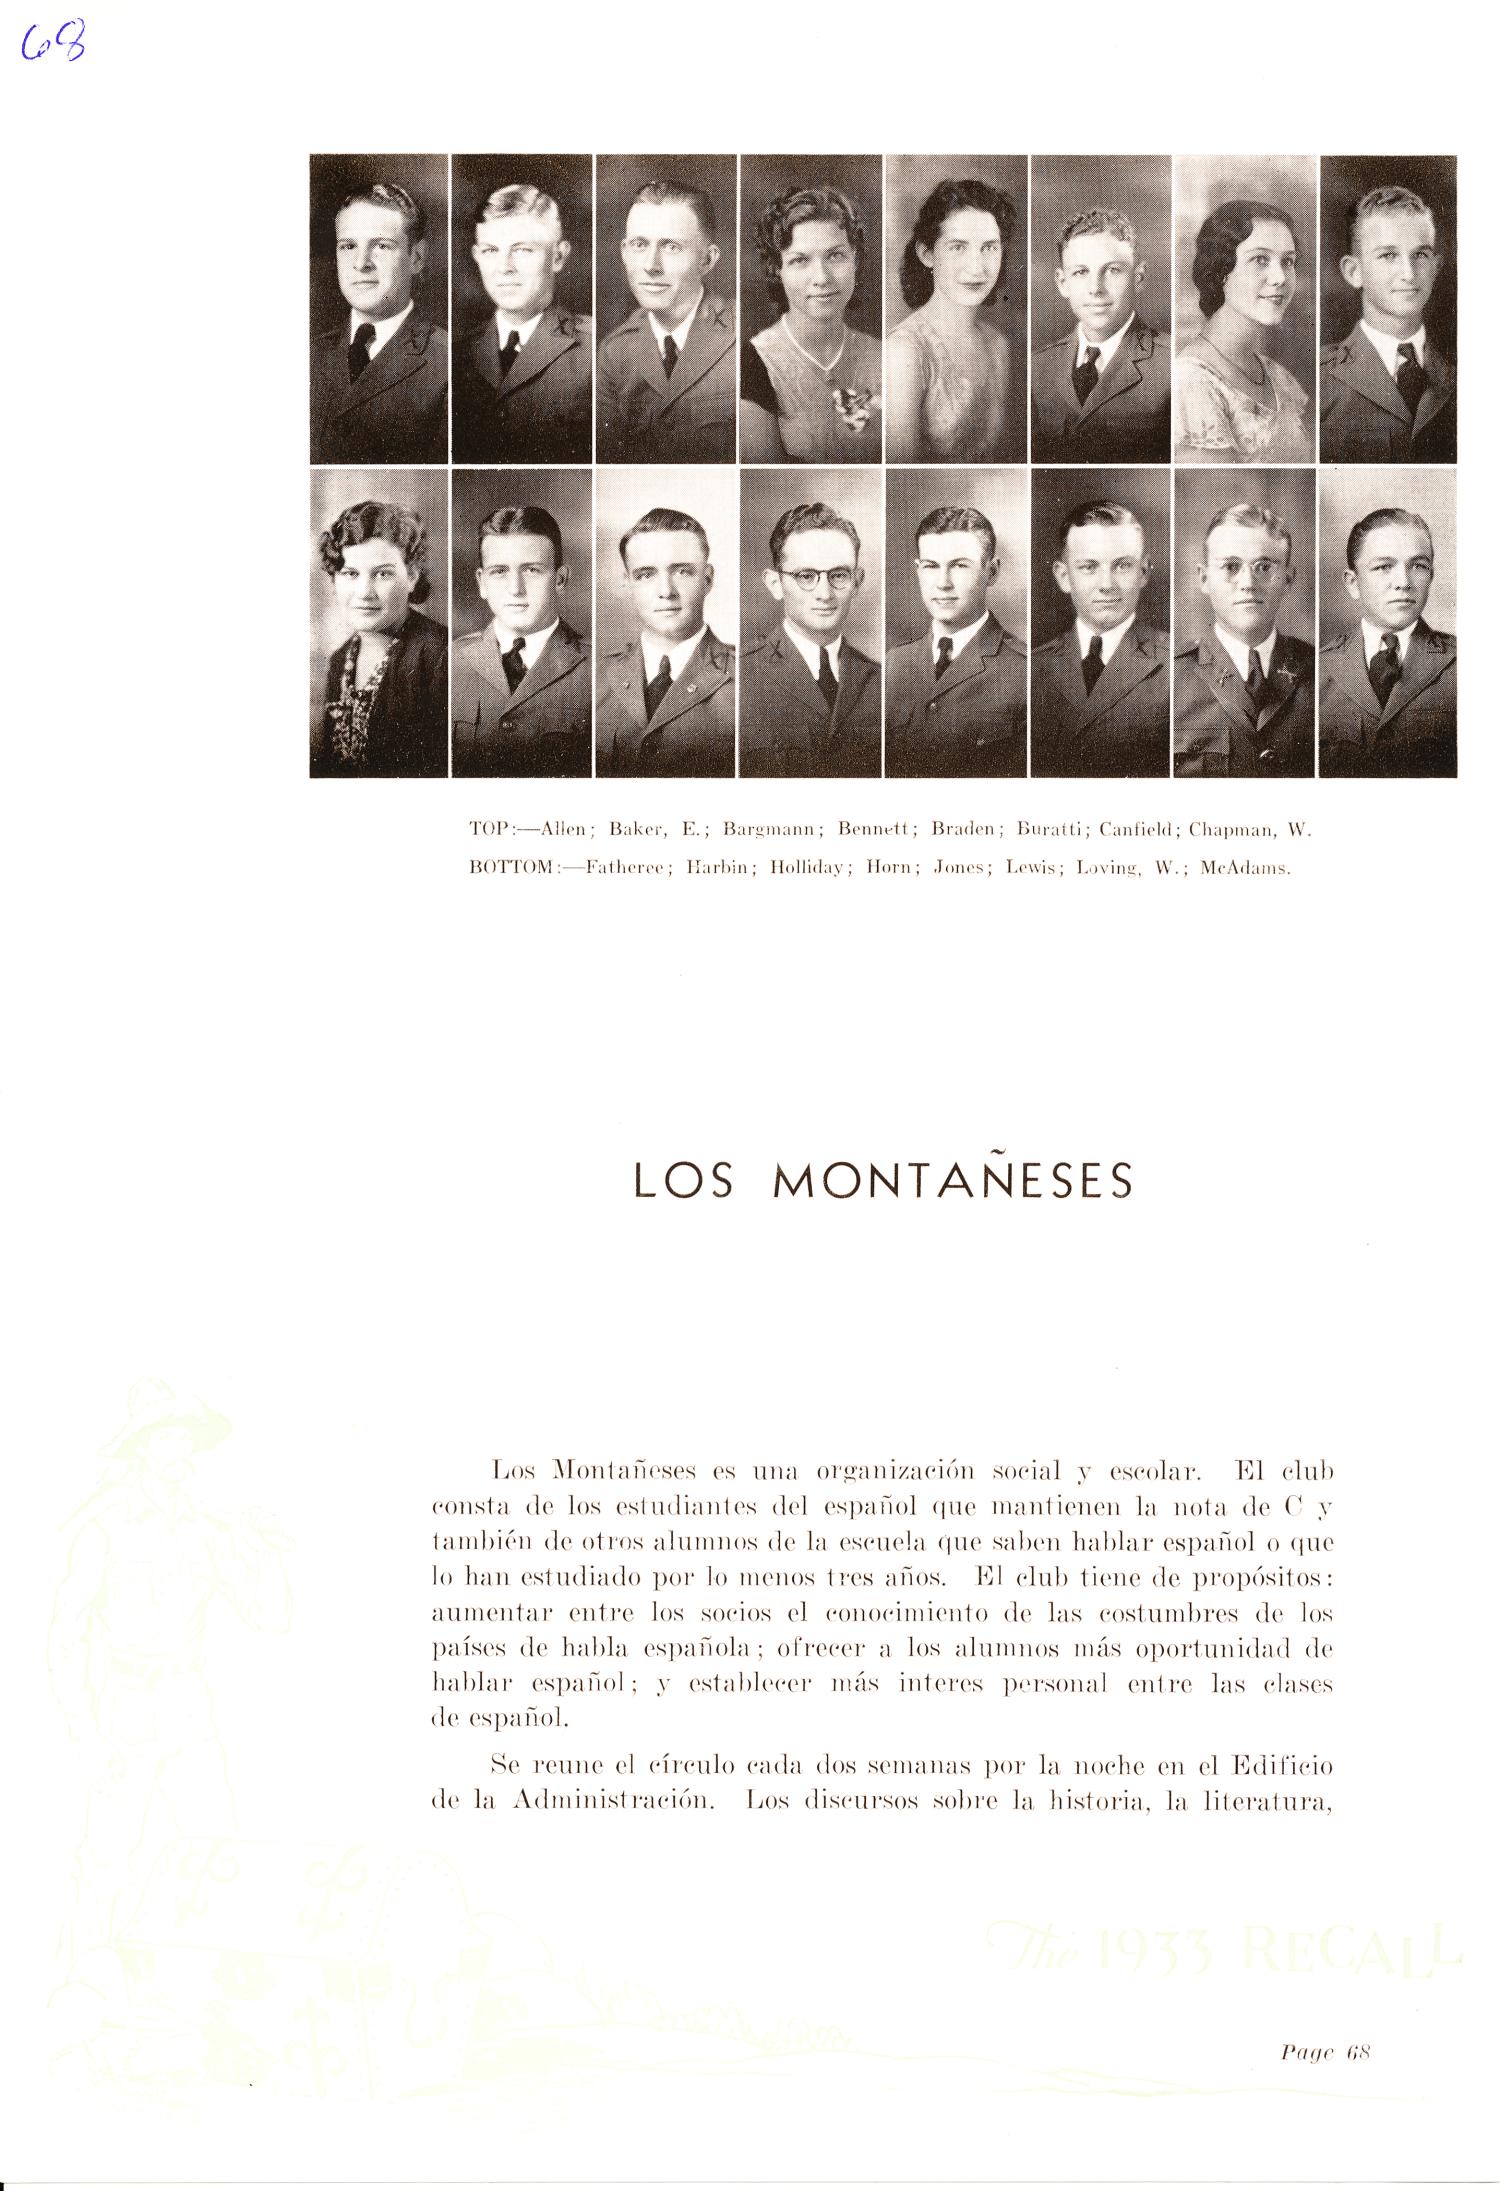 The Recall, Yearbook of Schreiner Institute, 1933
                                                
                                                    68
                                                